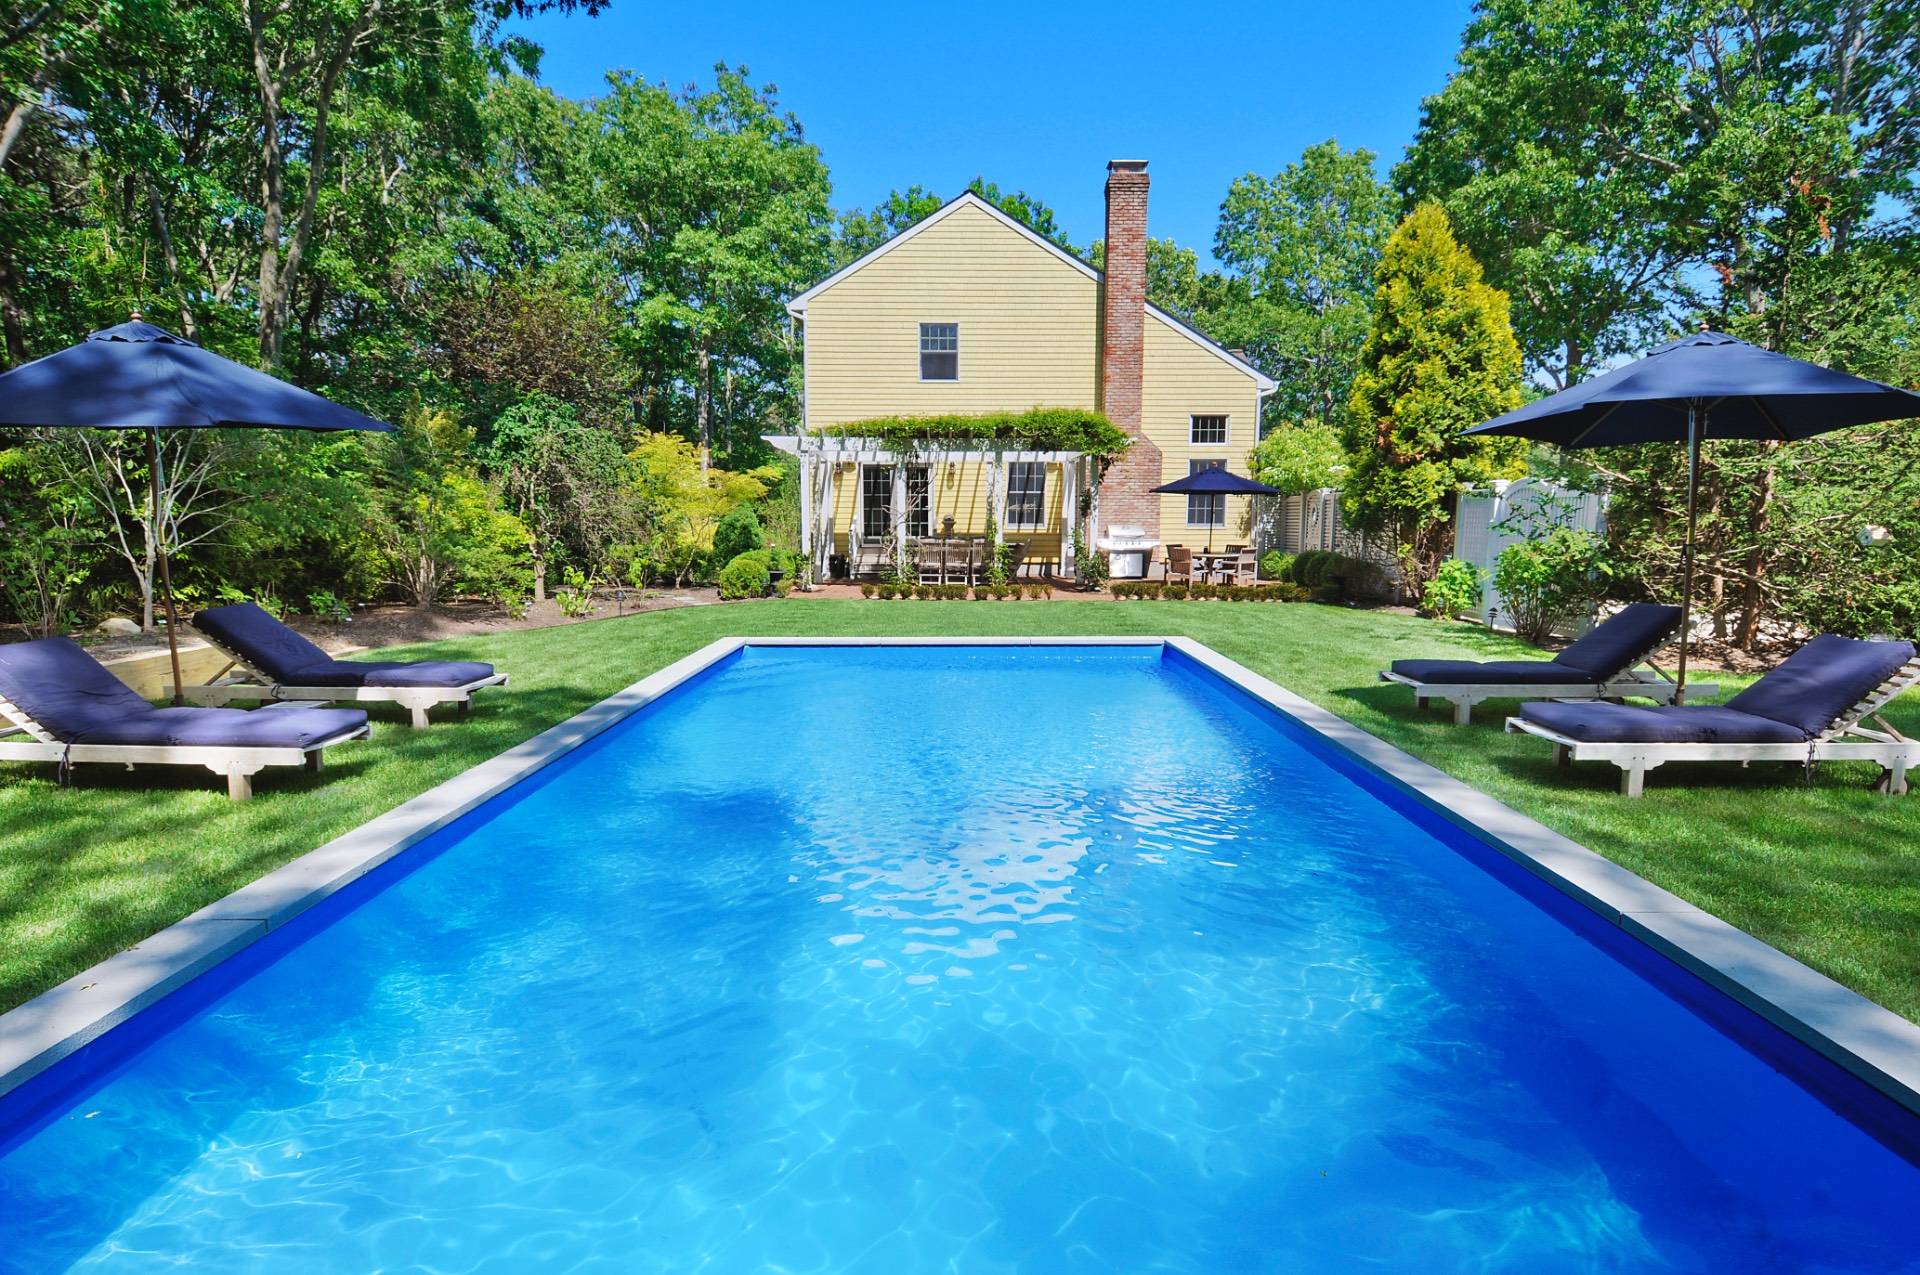 Rental Property at East Hampton, East Hampton, Hamptons, NY - Bedrooms: 5 
Bathrooms: 4.5  - $40,000 MO.